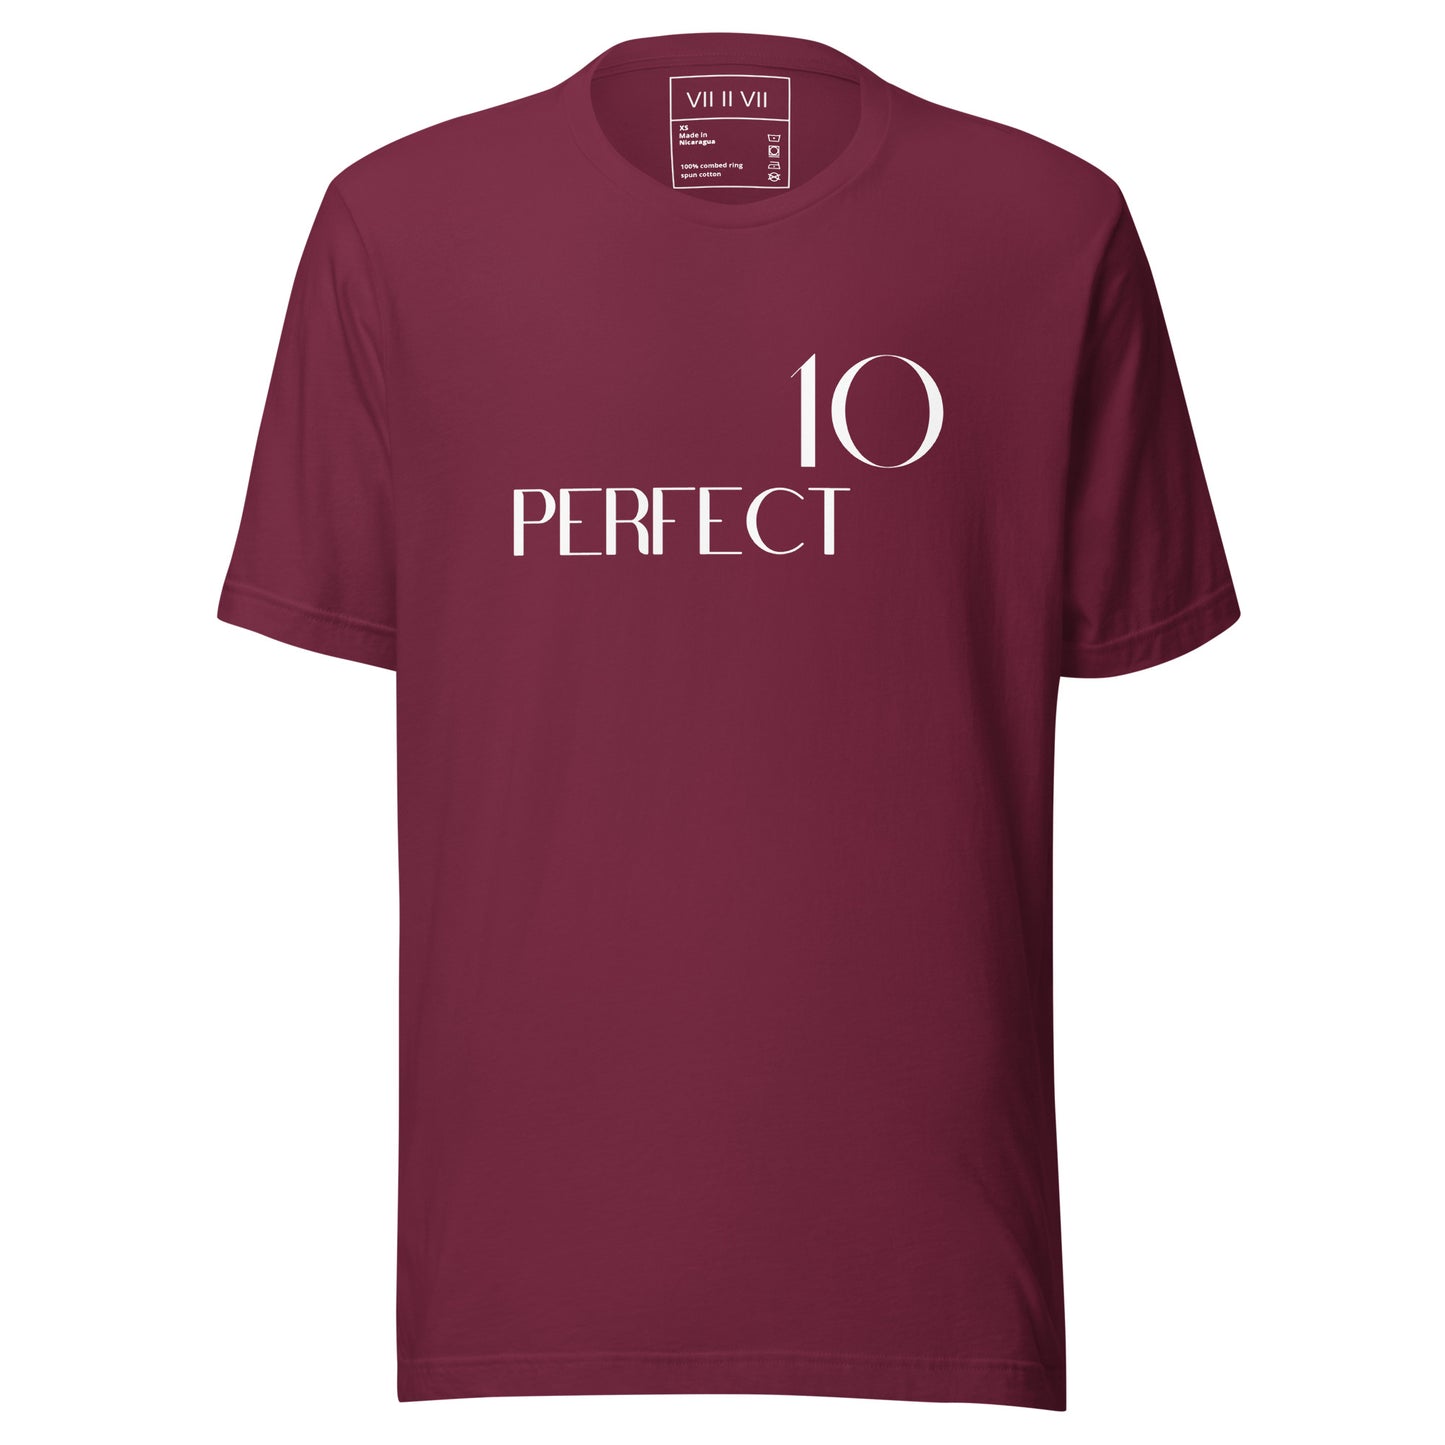 Perfect 10- Tee